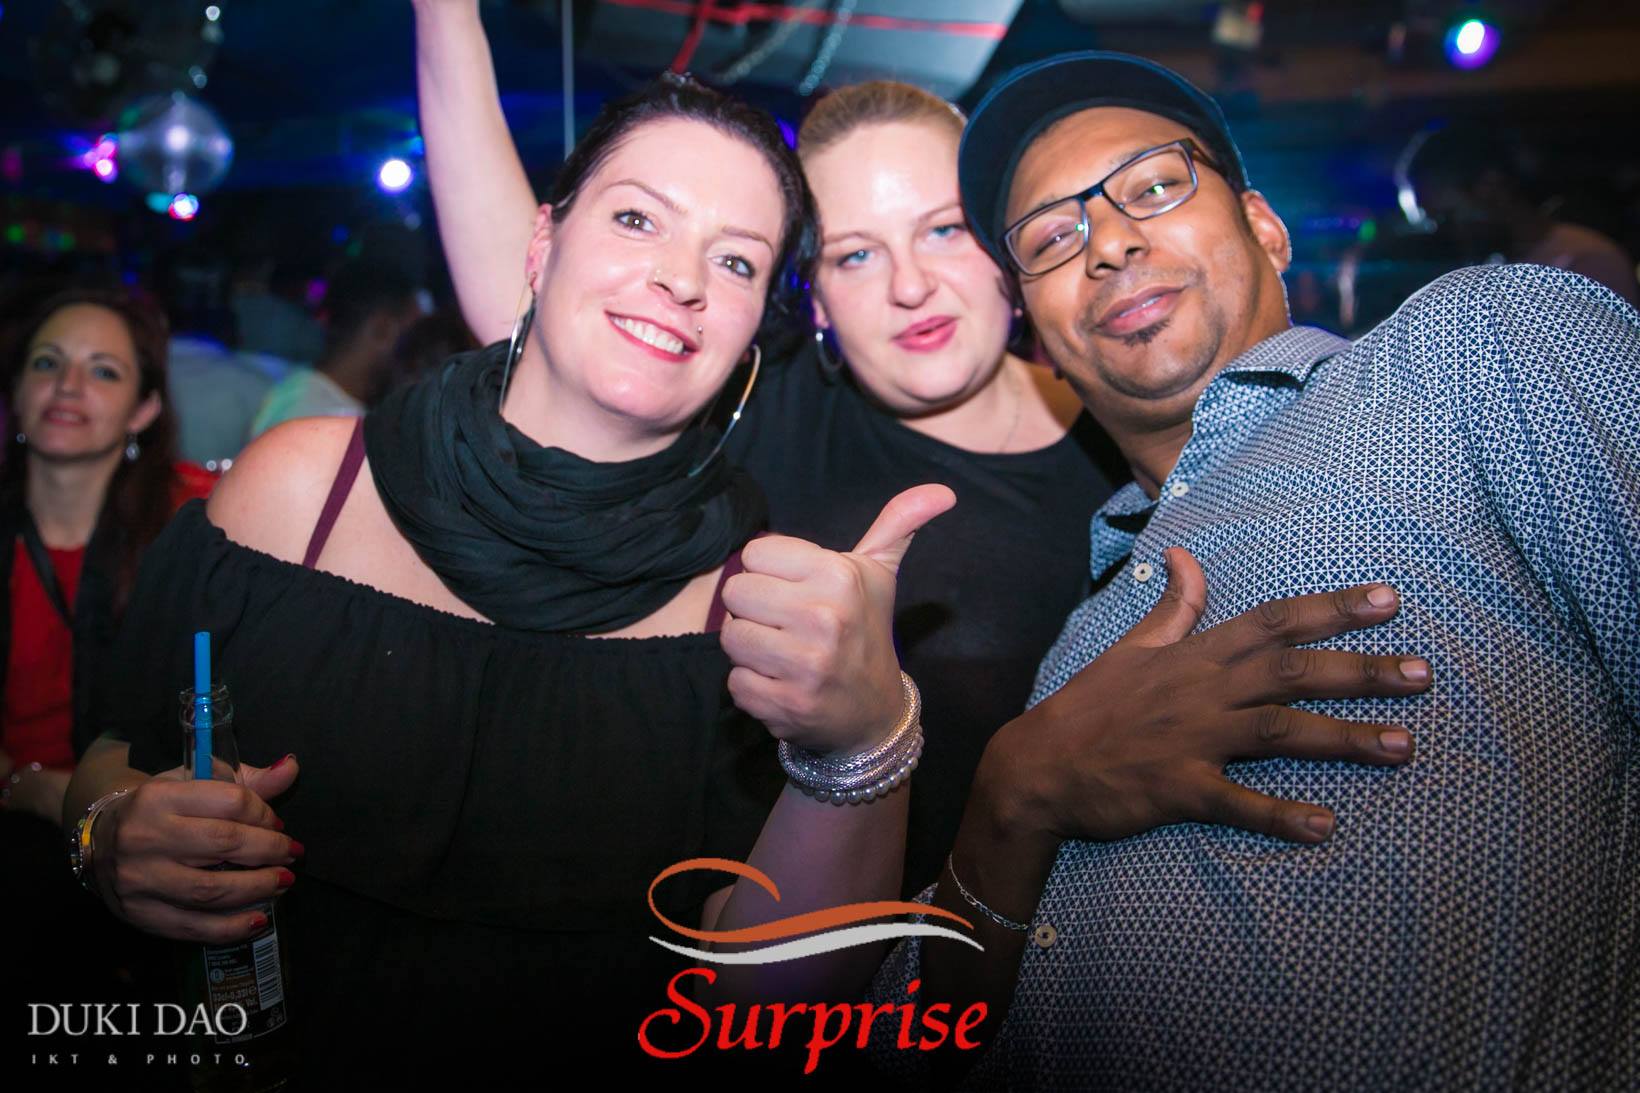 Afrobeat party in Surprise Club Berlin